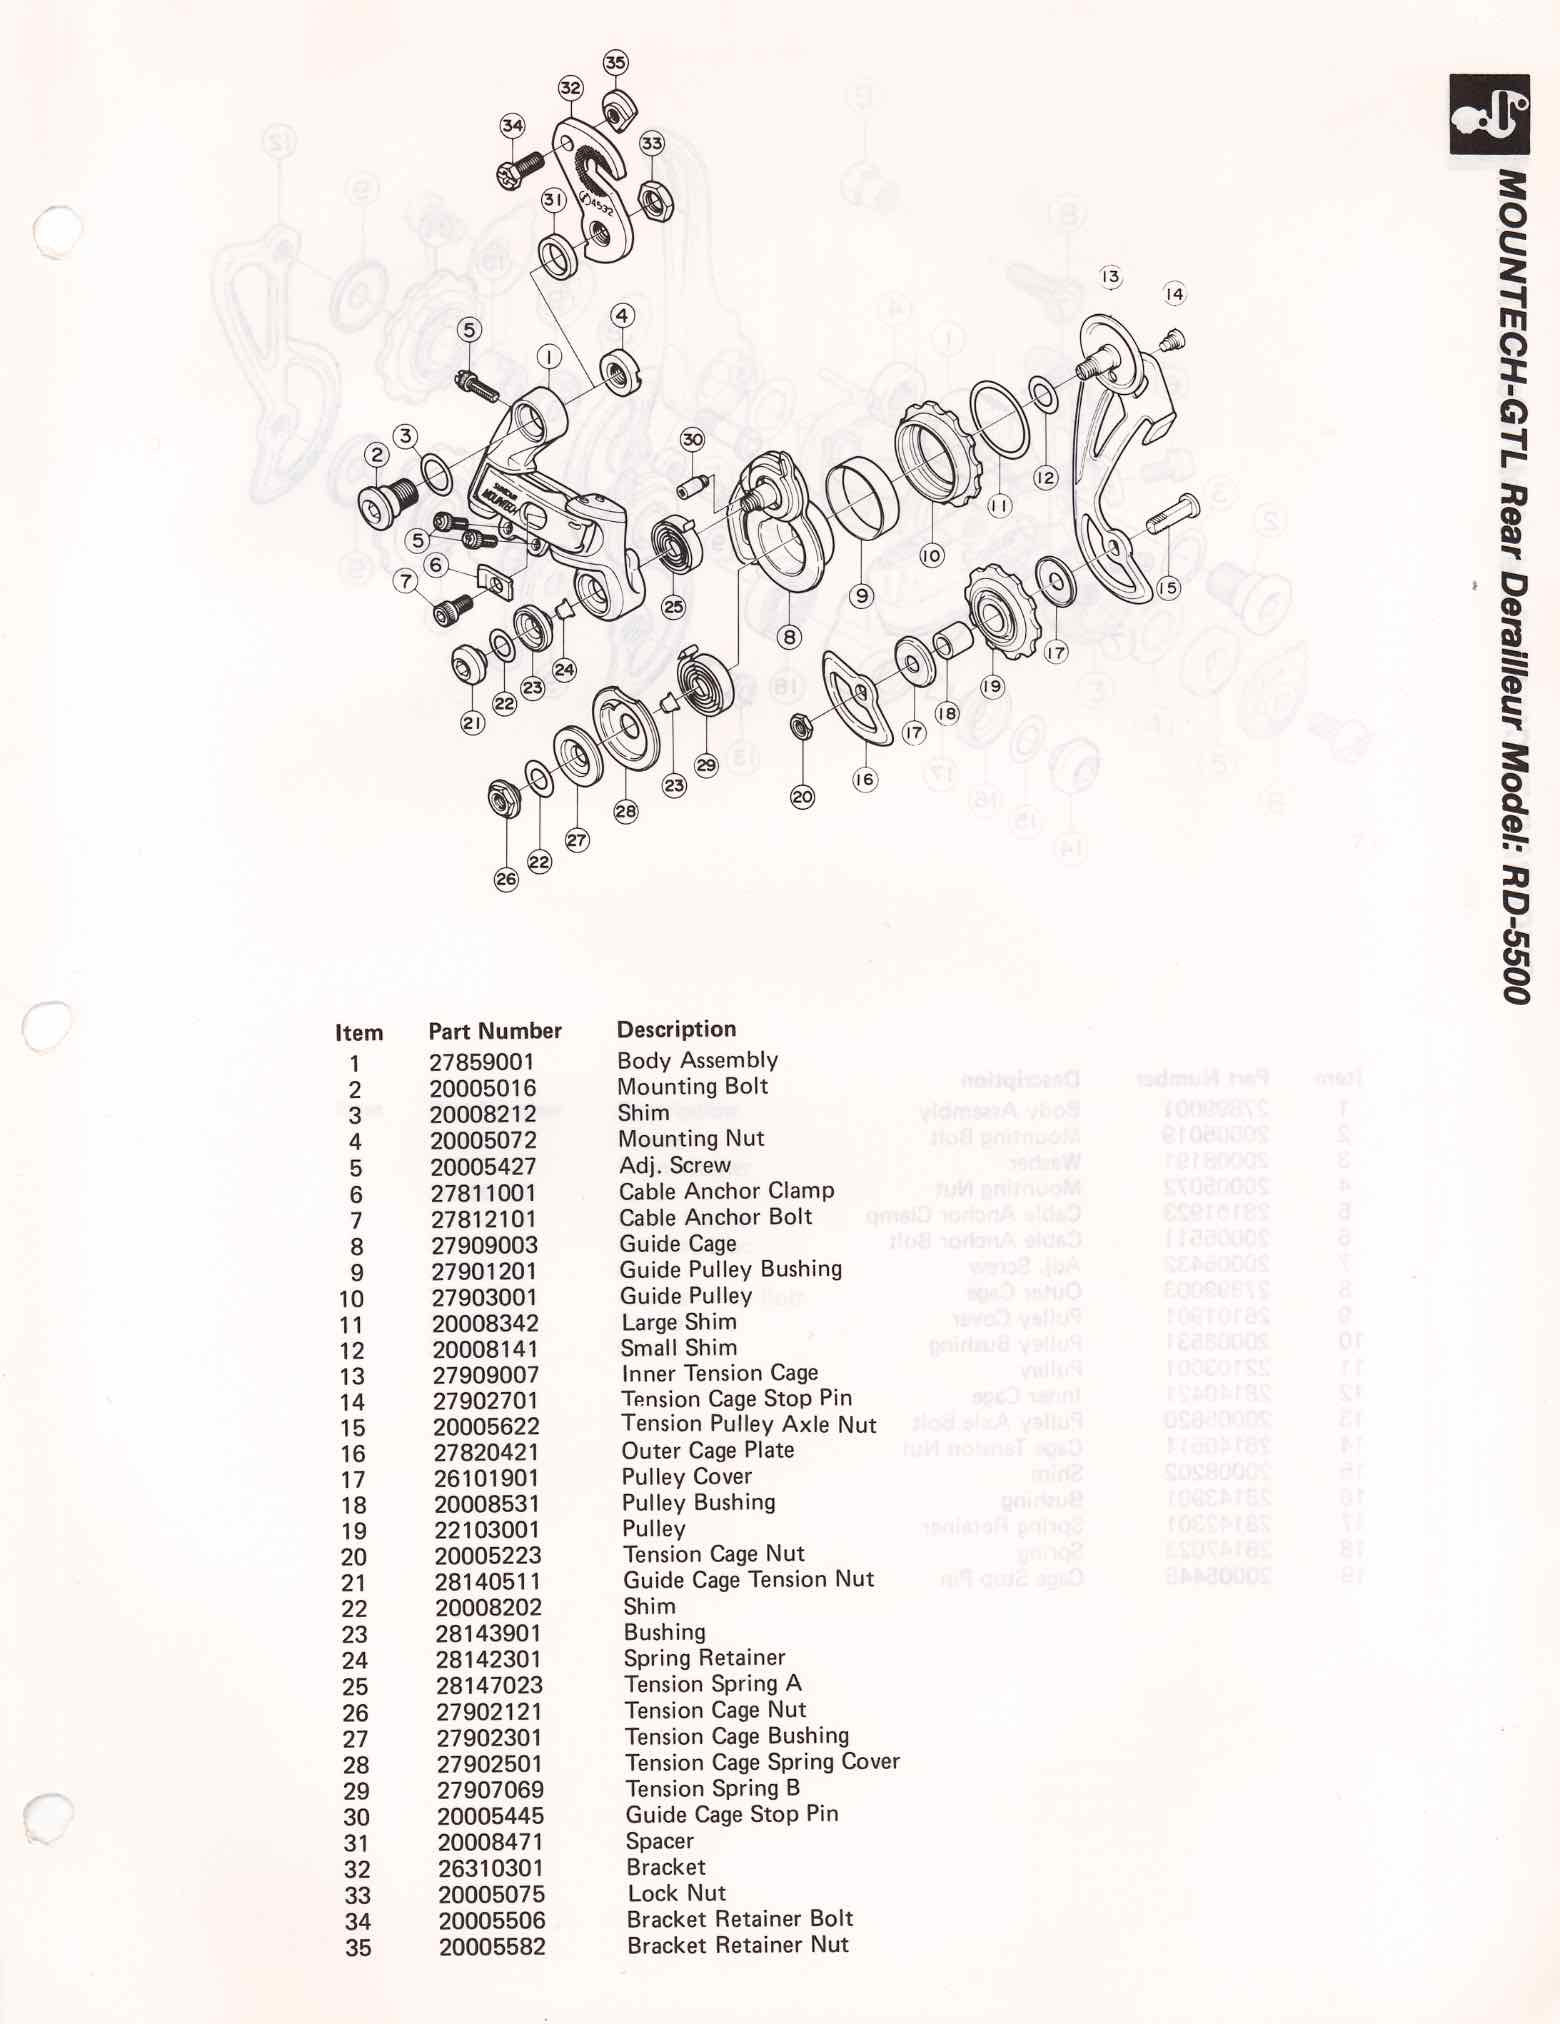 SunTour Small Parts Catalog - 1983? scan 16 main image